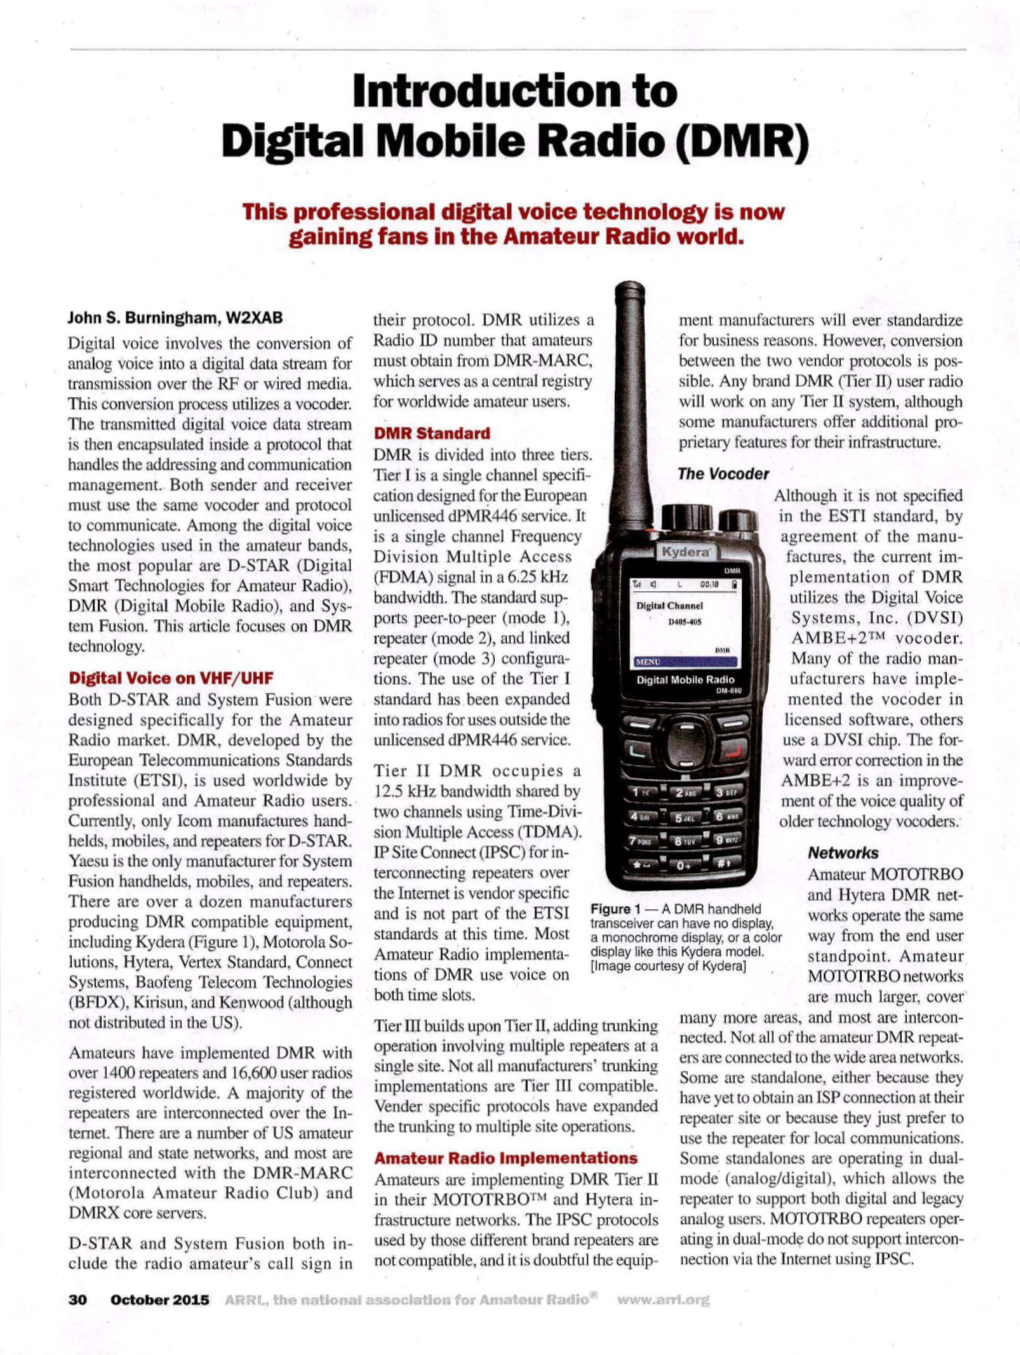 Introduction to Digital Mobile Radio (DMR)